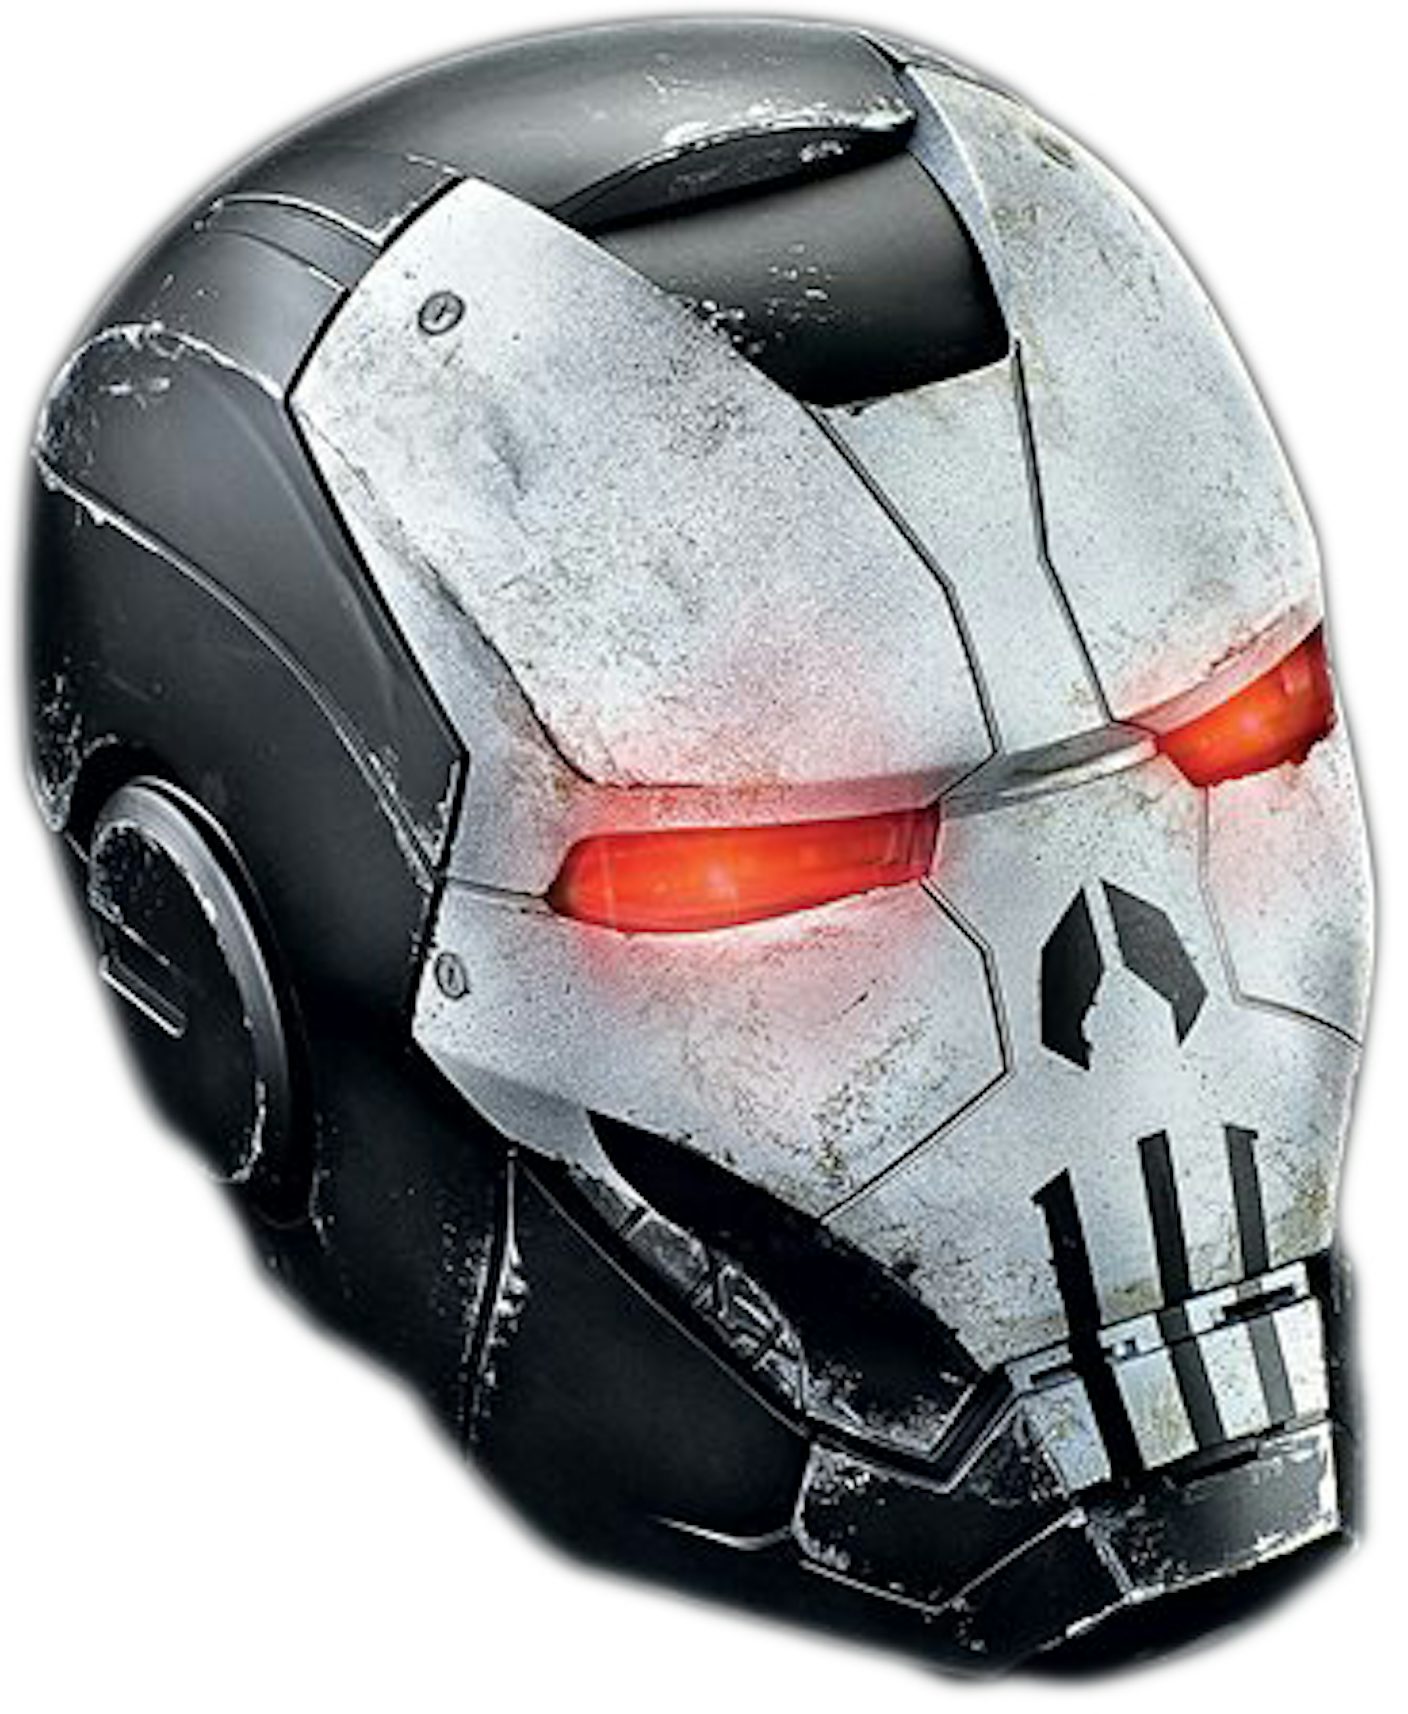 NEW Hasbro Marvel Legends Avengers Iron Man Electronic Helmet Prop